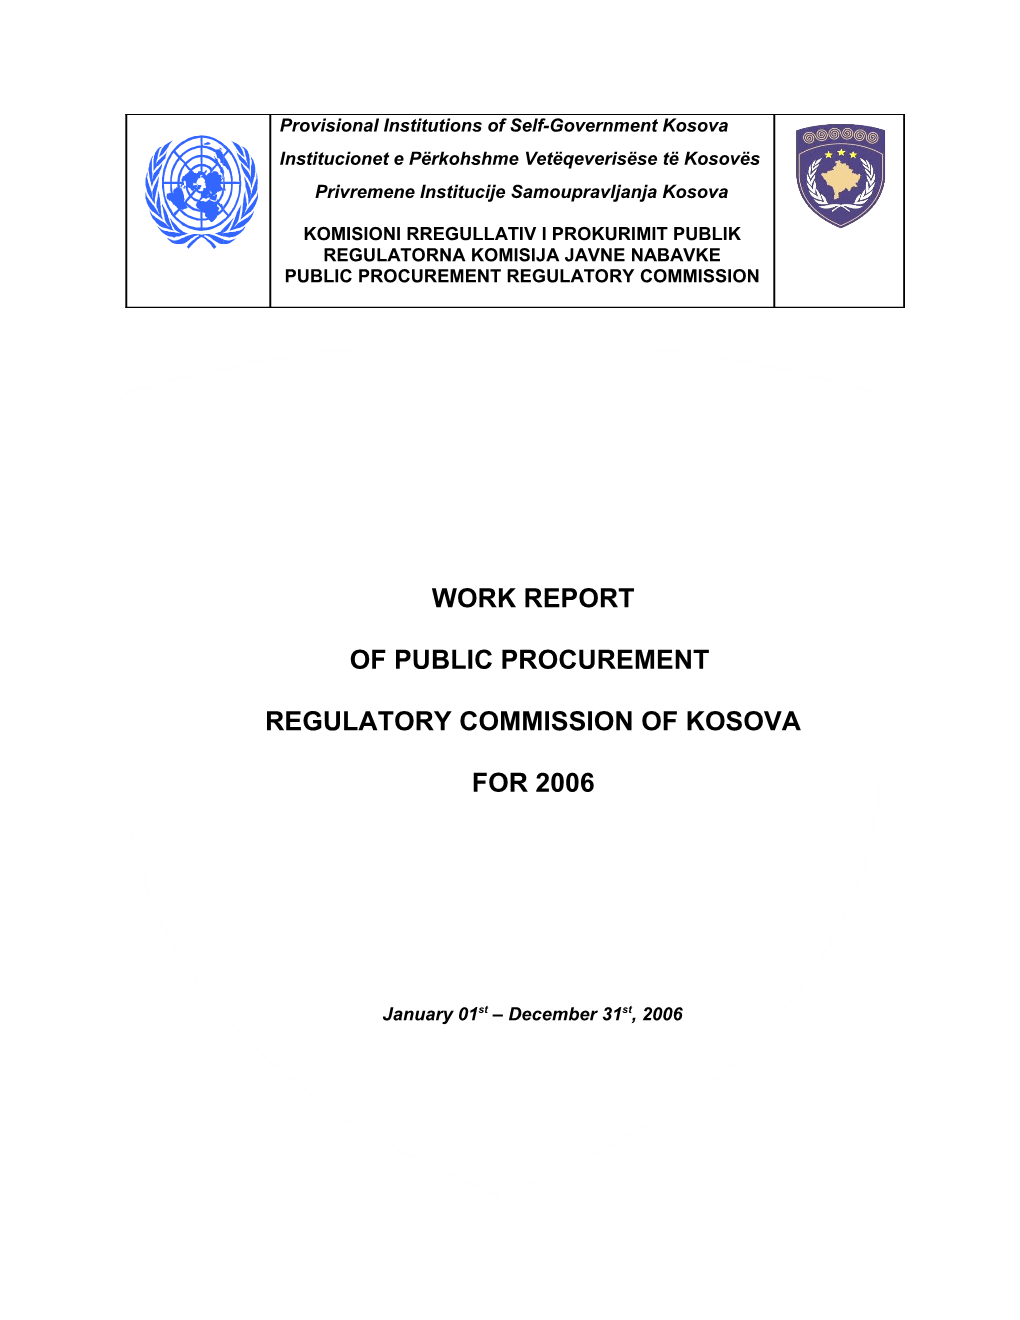 Of Public Procurement